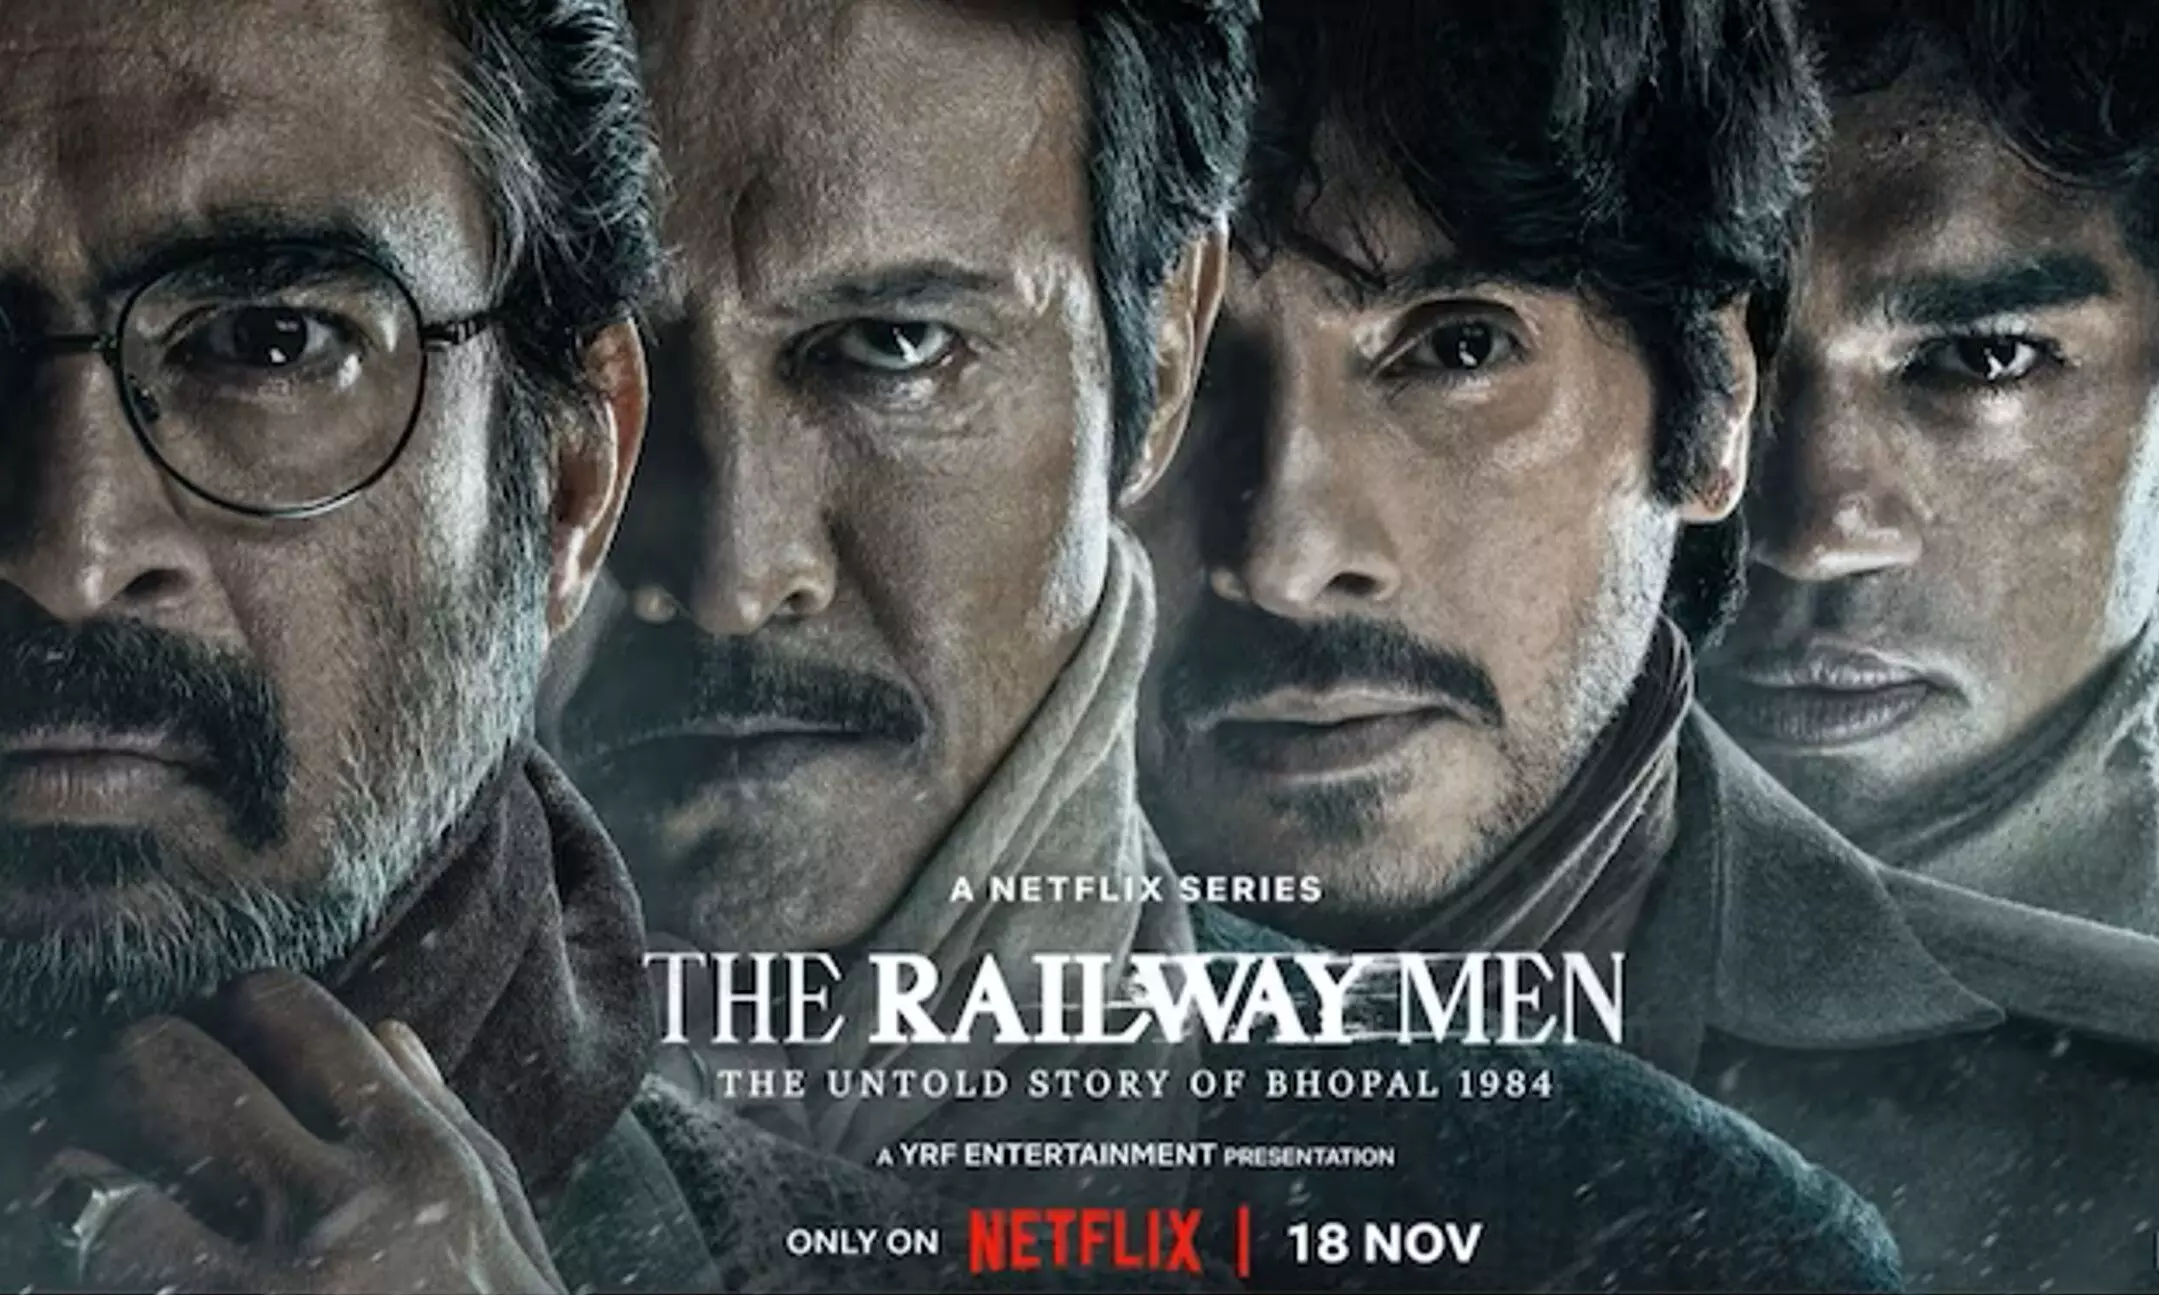 The Railway Men Trailer: द रेलवे मैन का ट्रेलर रिलीज, रूह कंपा देगी भोपाल गैस त्रासदी की कहानी